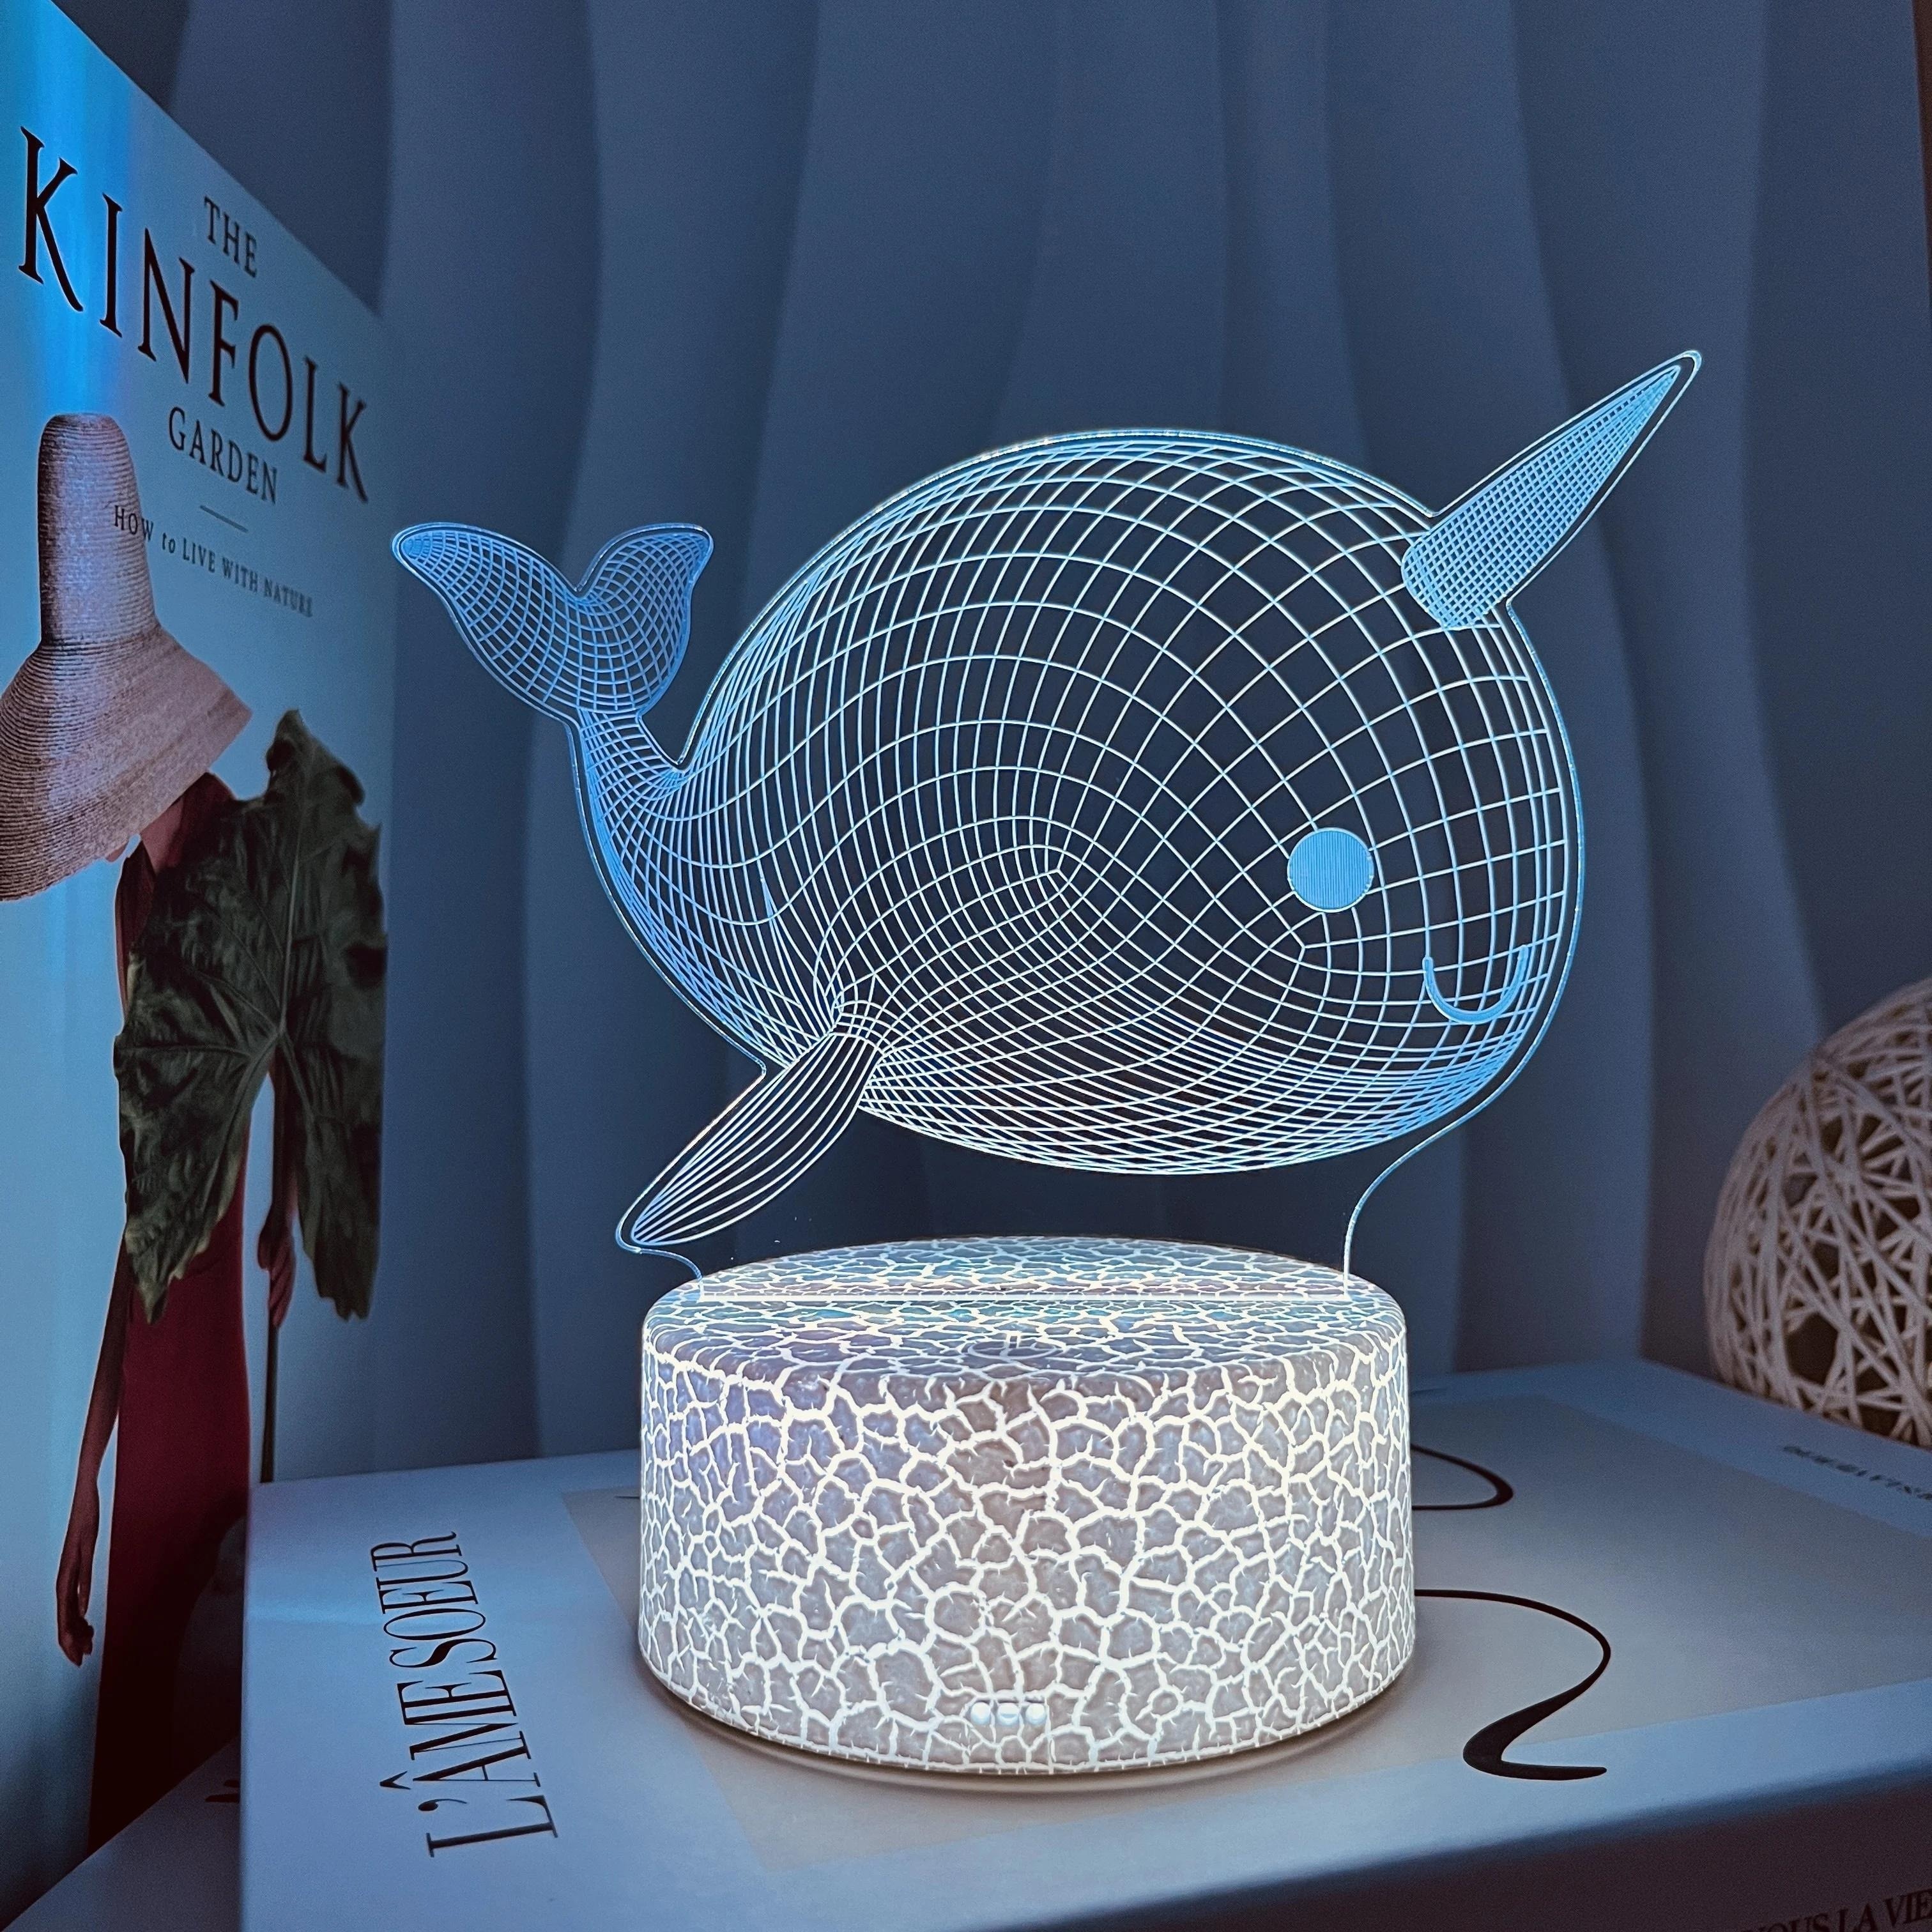 Luz de noche de Koala personalizada, lámpara acrílica con nombre